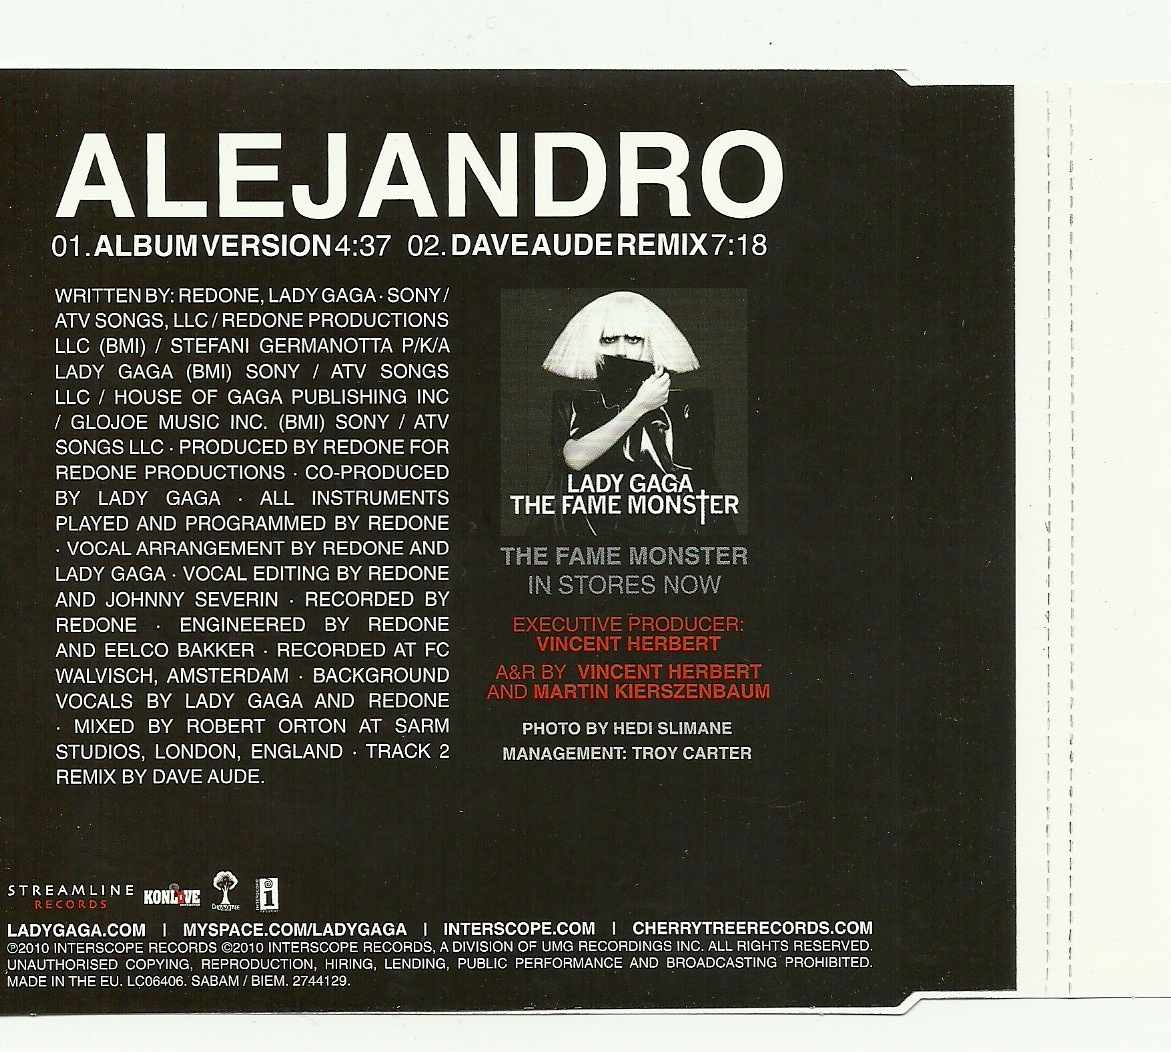 Песня леди гага перевод на русский. Alejandro обложка. Песня Алехандро текст. Lady Gaga Alejandro обложка. Песня со словами Алехандро.